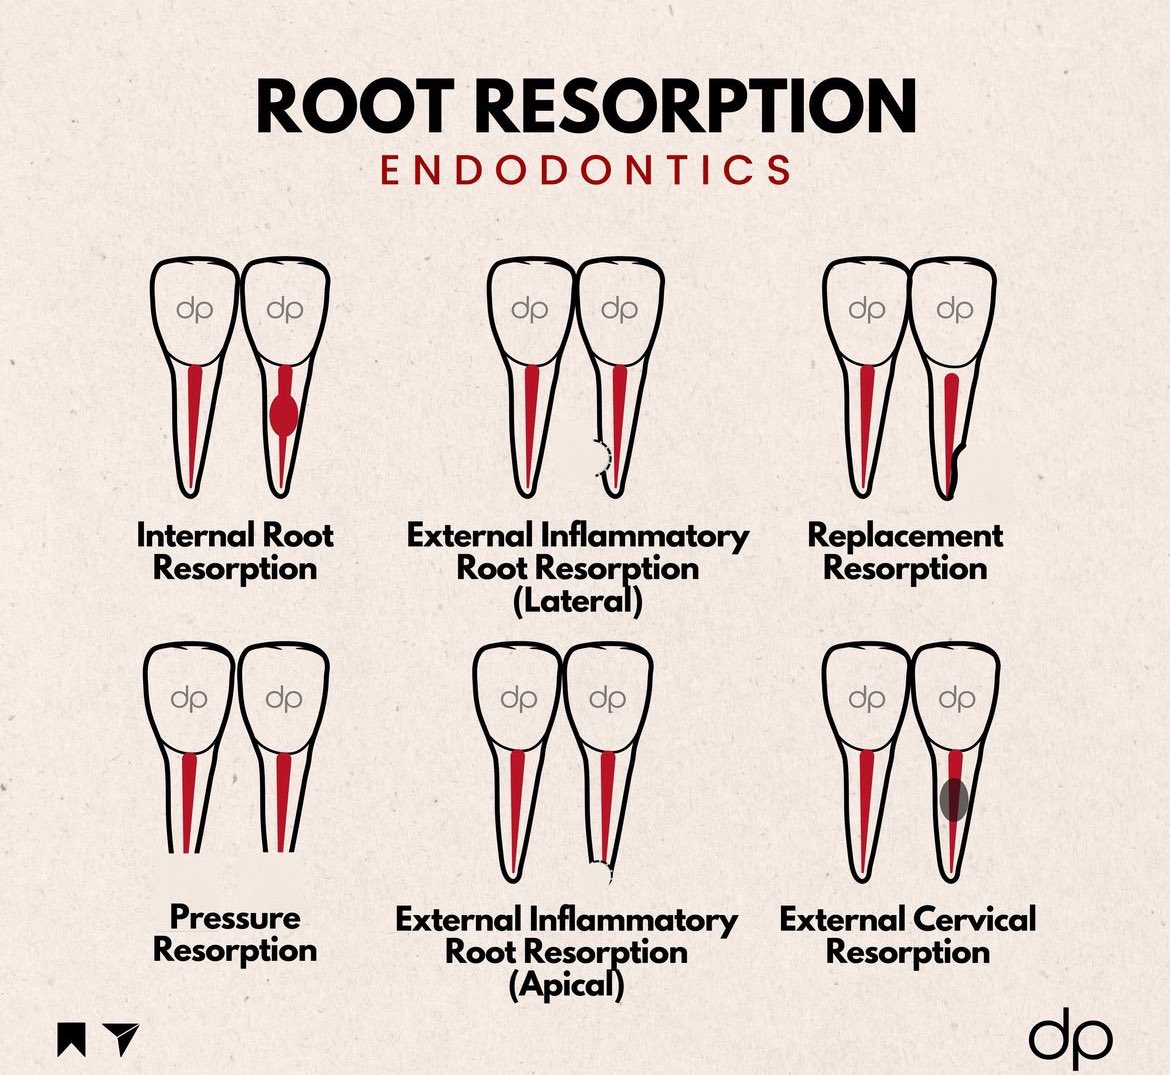 Root resorption in endodontics